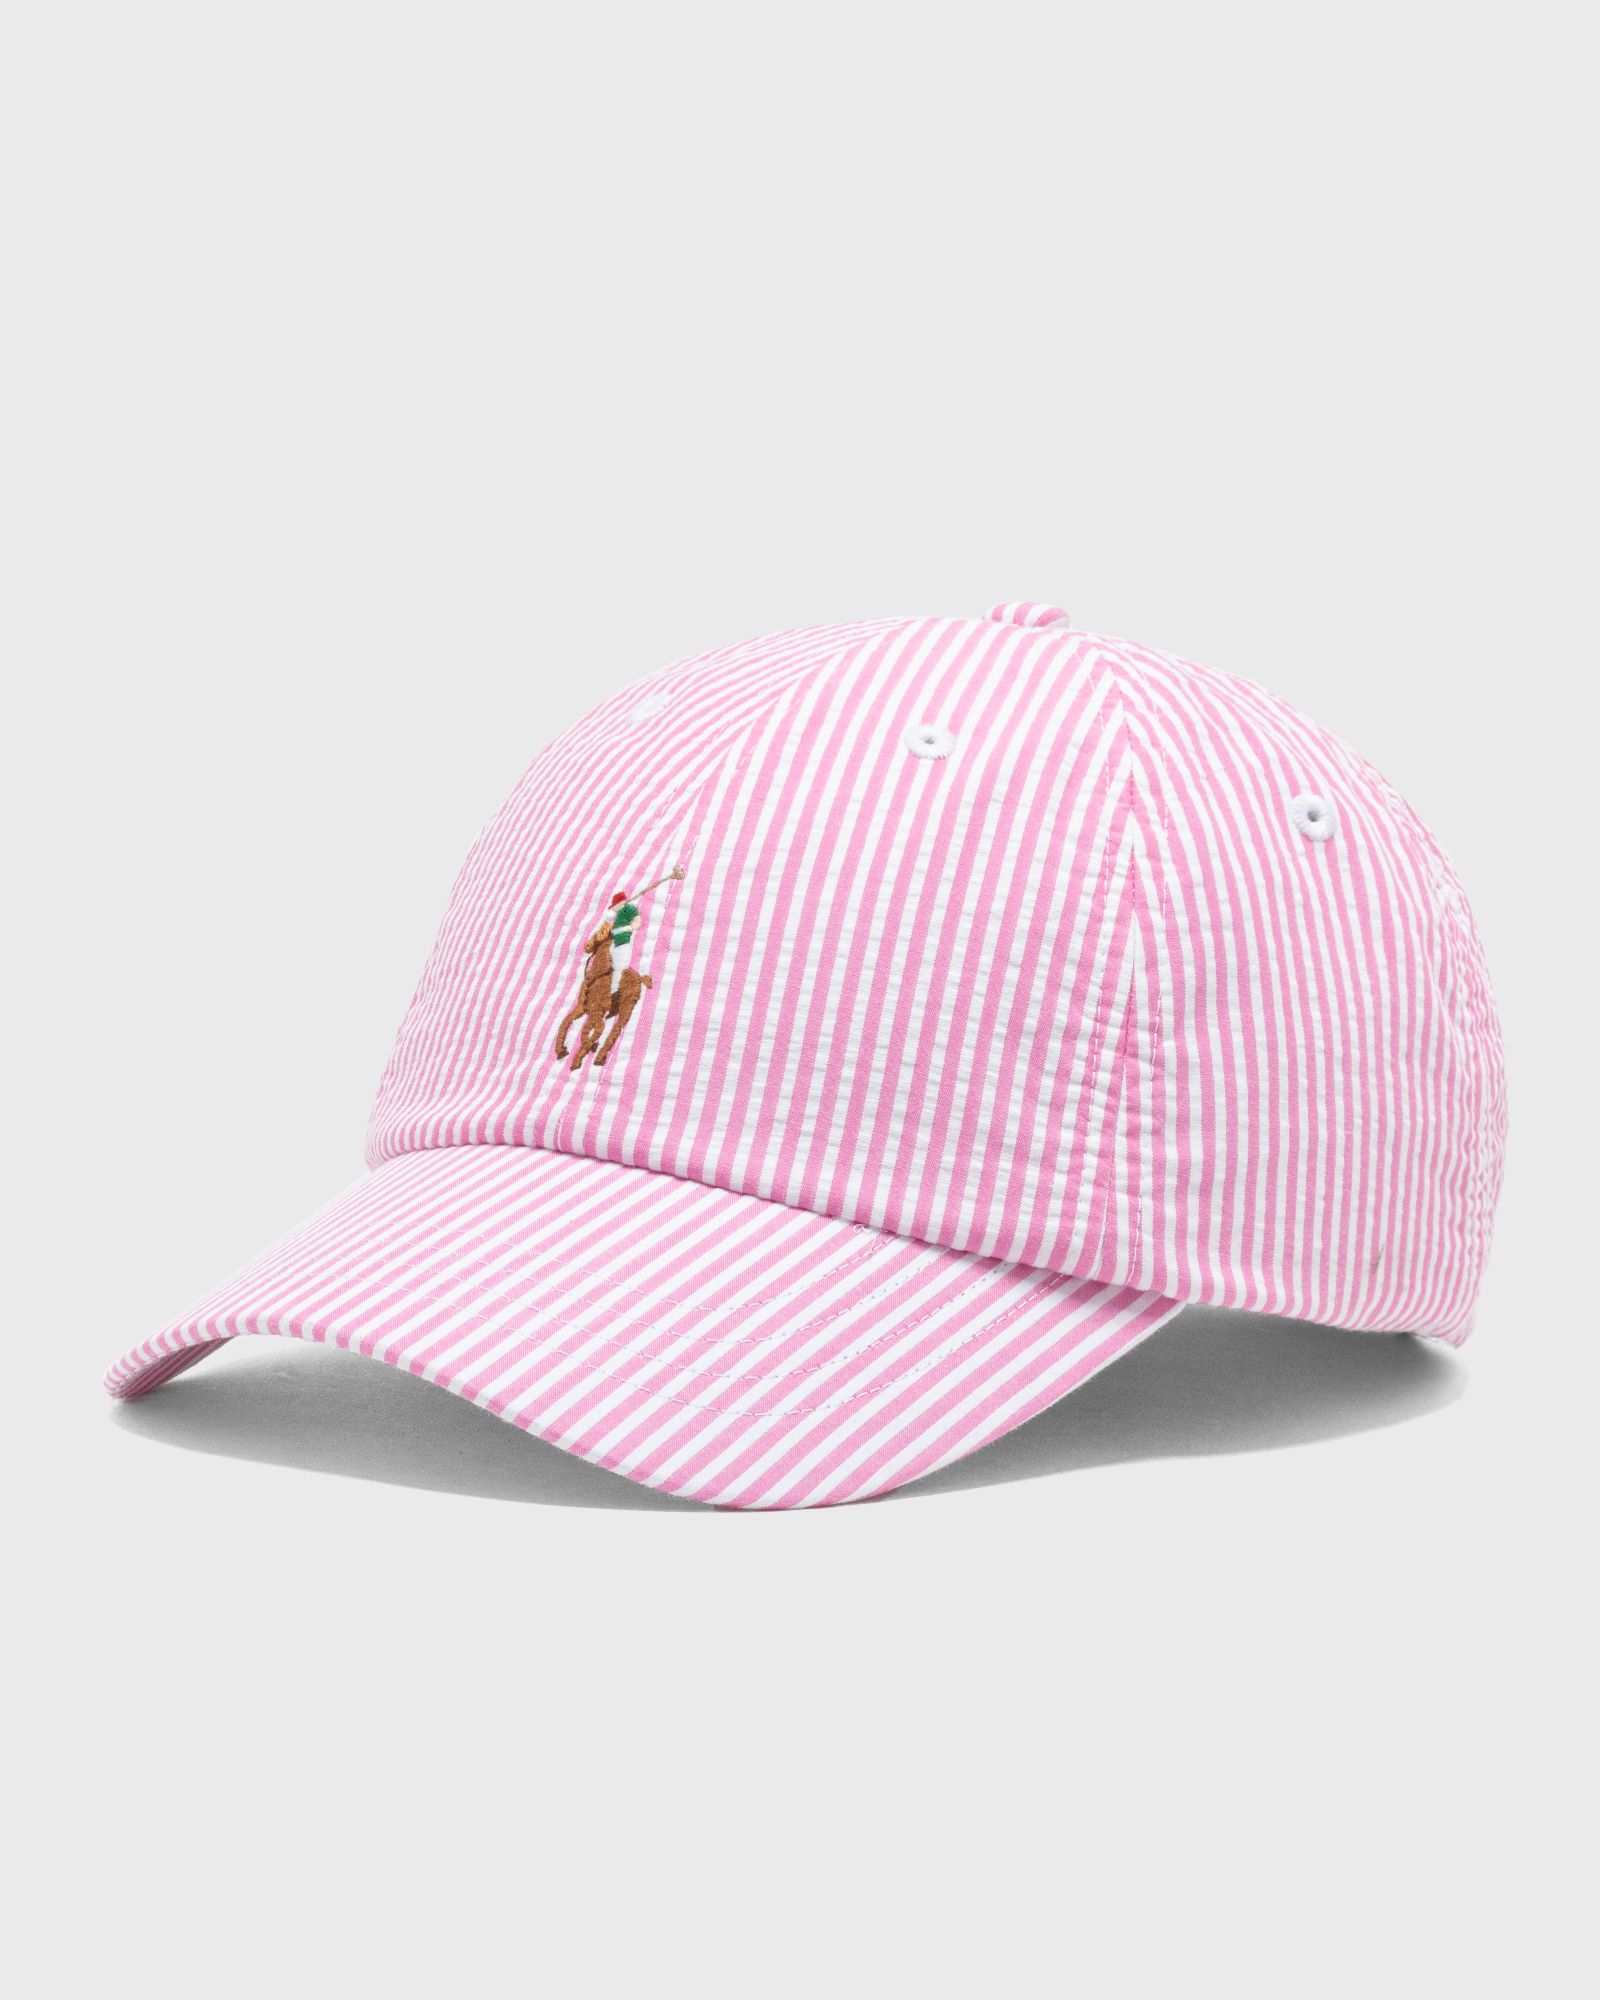 Polo Ralph Lauren - classics sport cap men caps pink|white in größe:one size